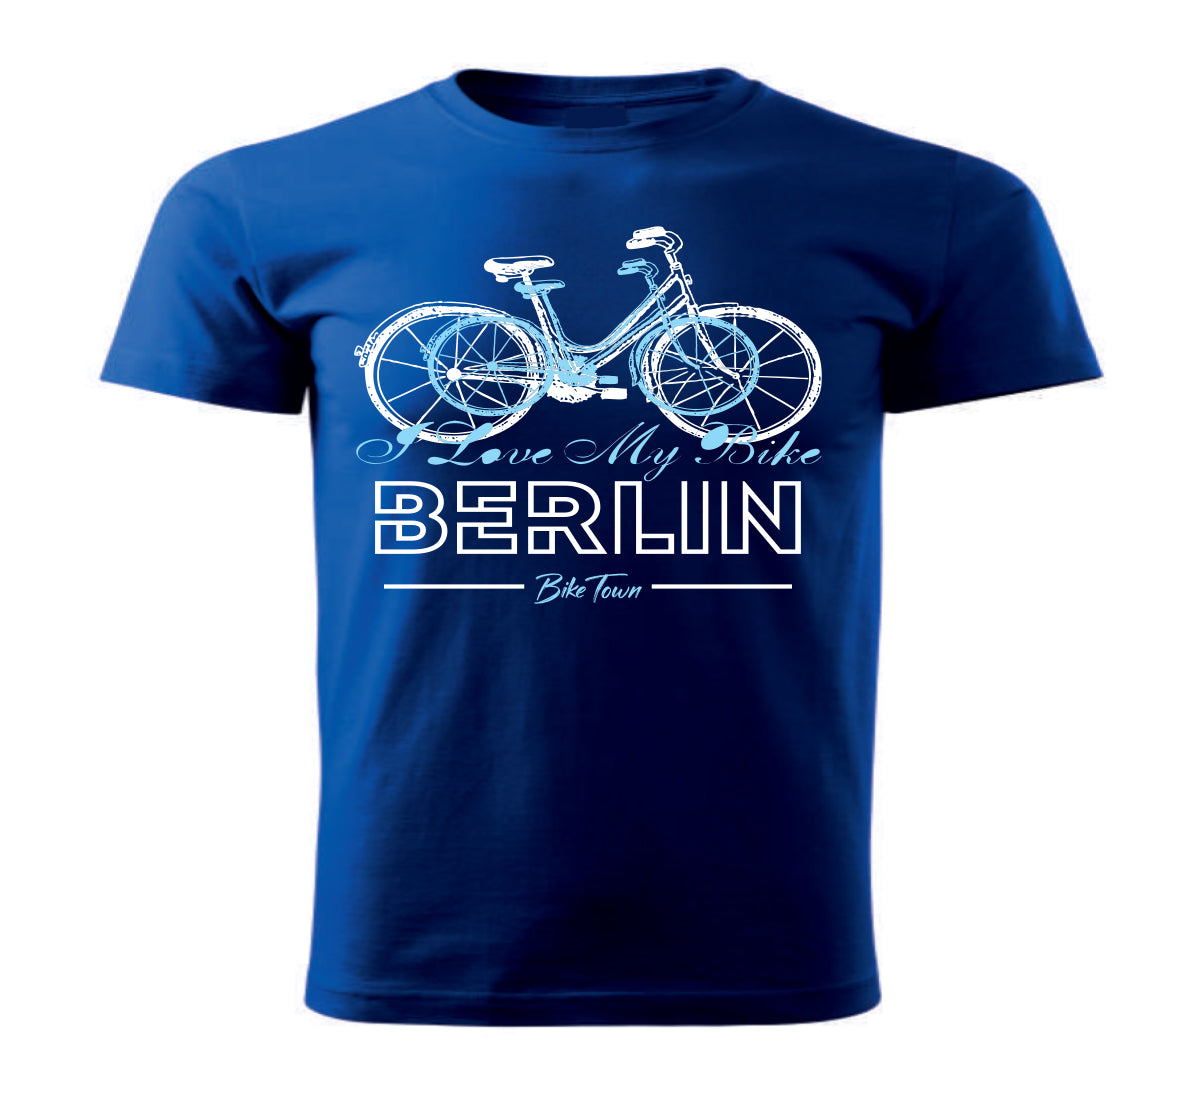 T-Shirt "Berlin Bike royal blue" by Robin Ruth